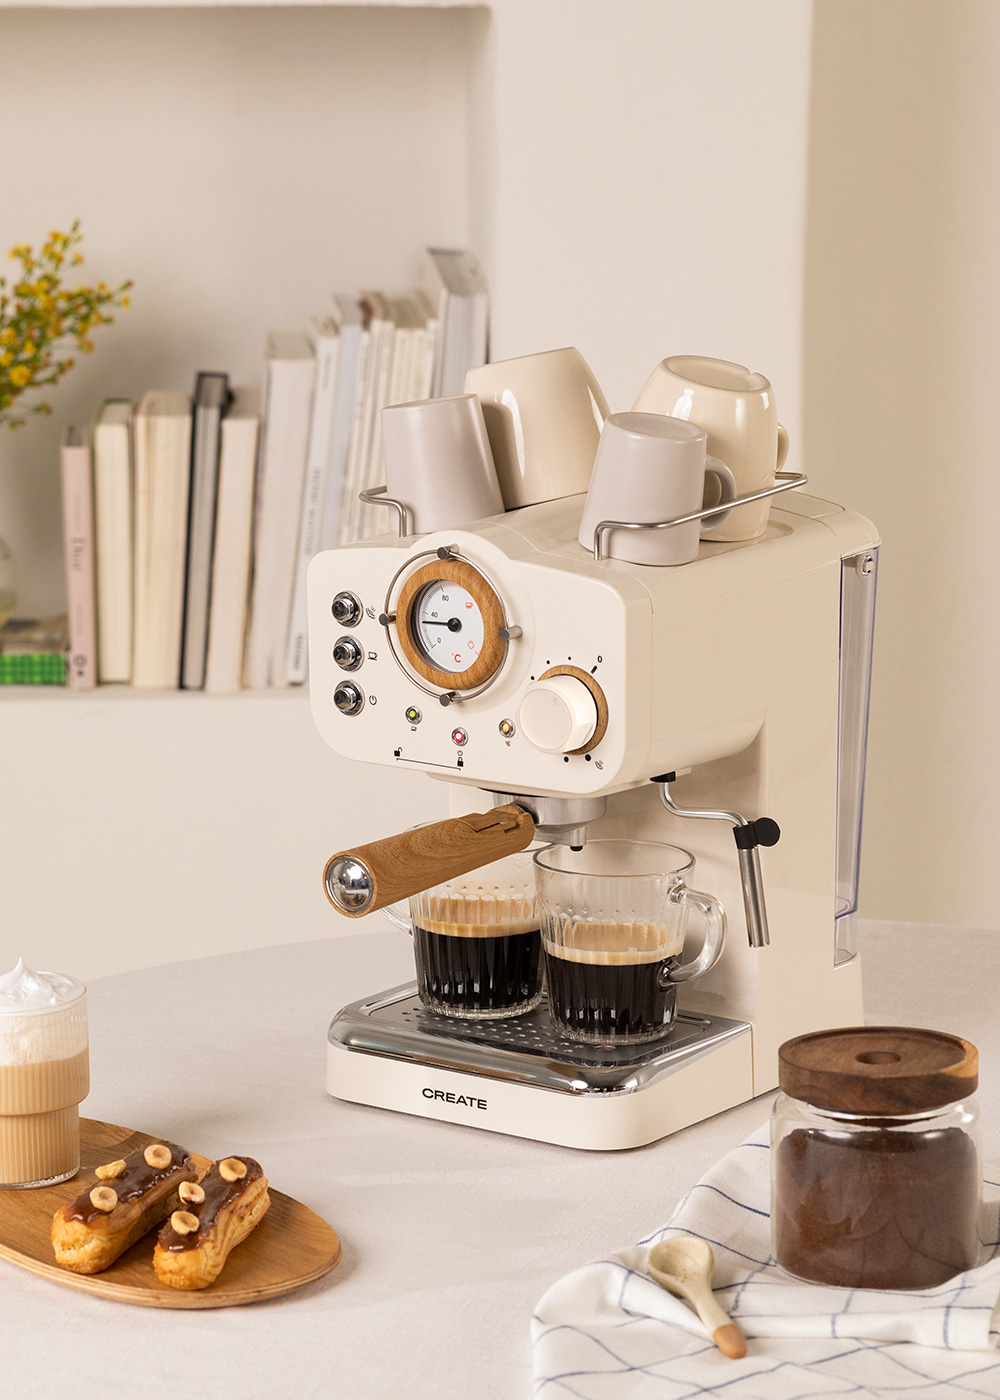 CREATE / THERA EASY/Machine à espresso grise/Machine automatique à espresso  et cappuccino, pour café moulu.